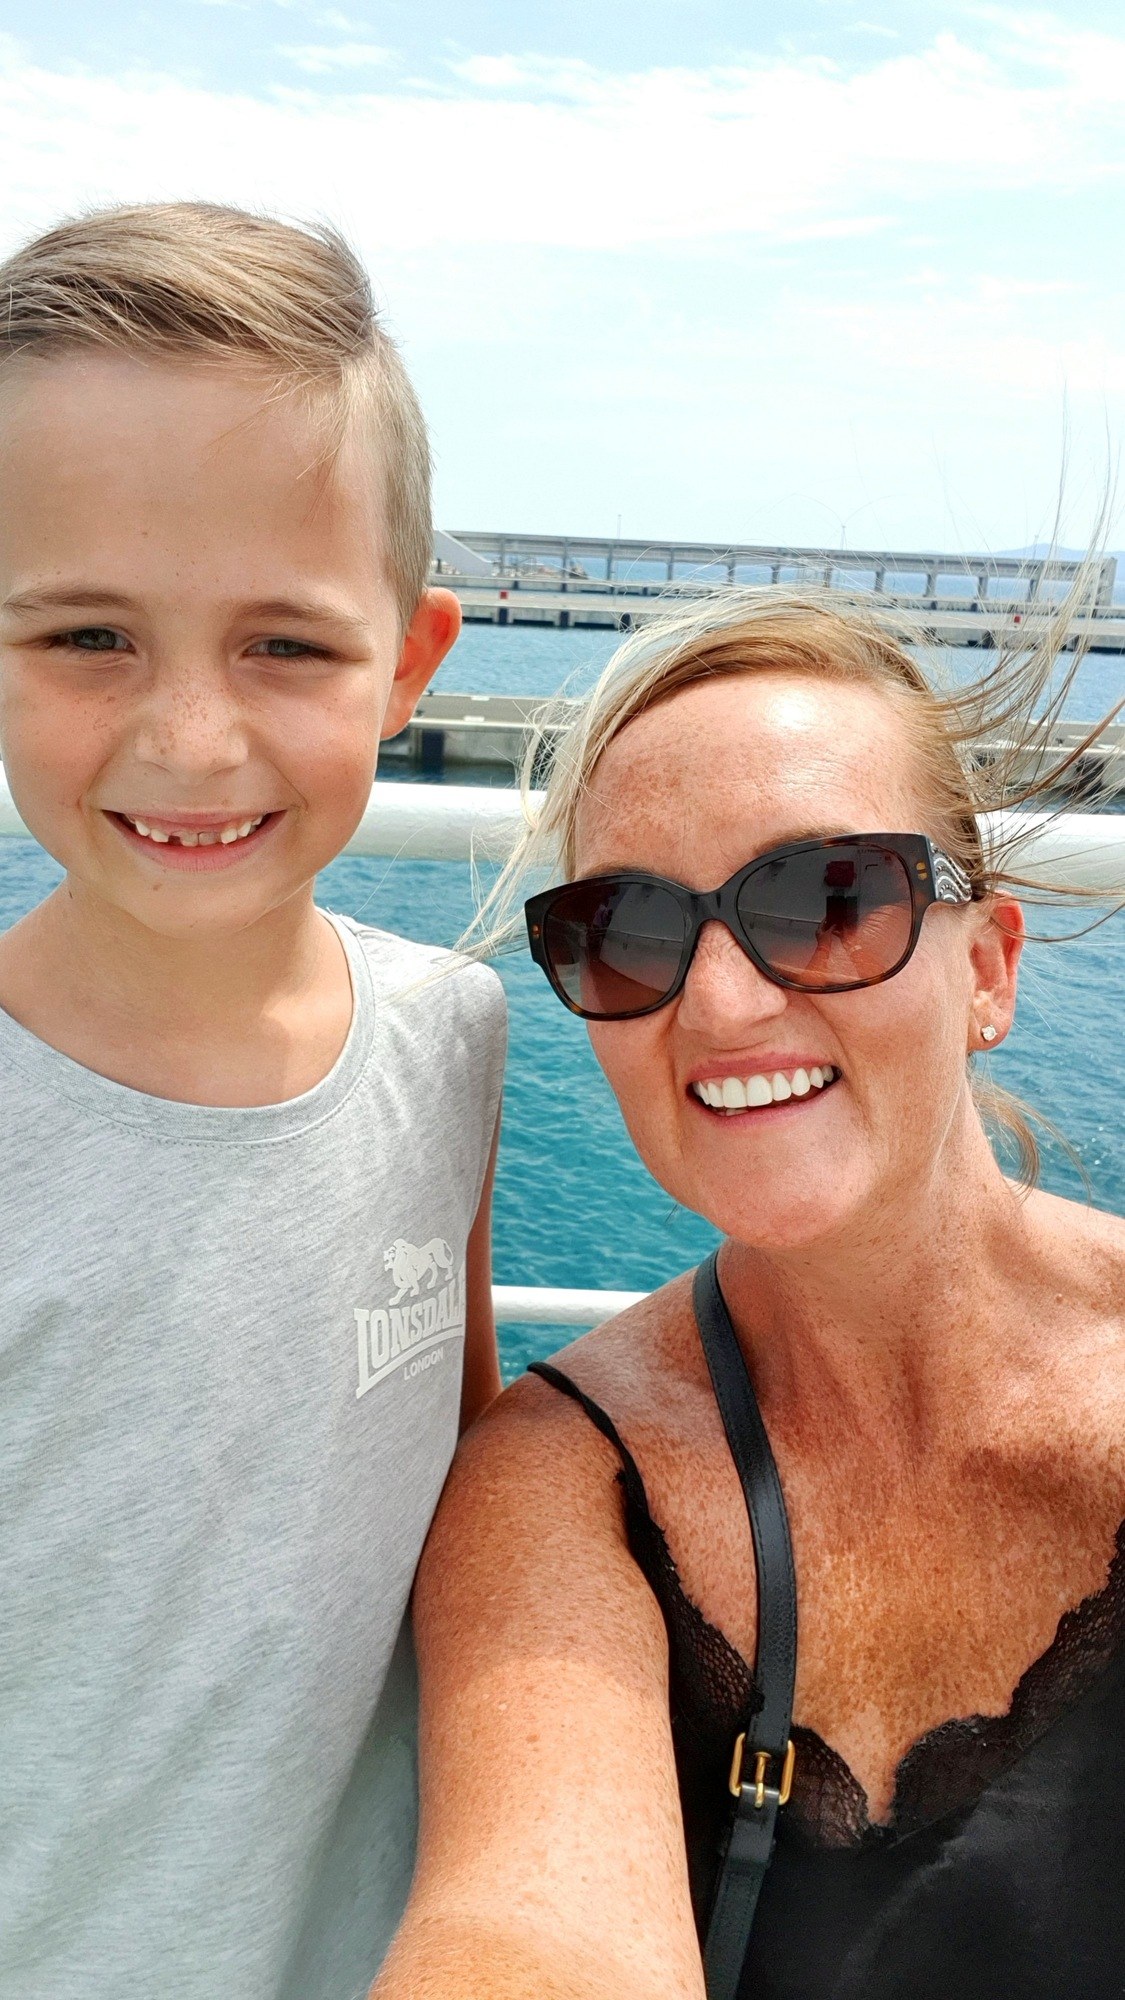 Life In Croatia - School - Ferry Ride With Vladimir